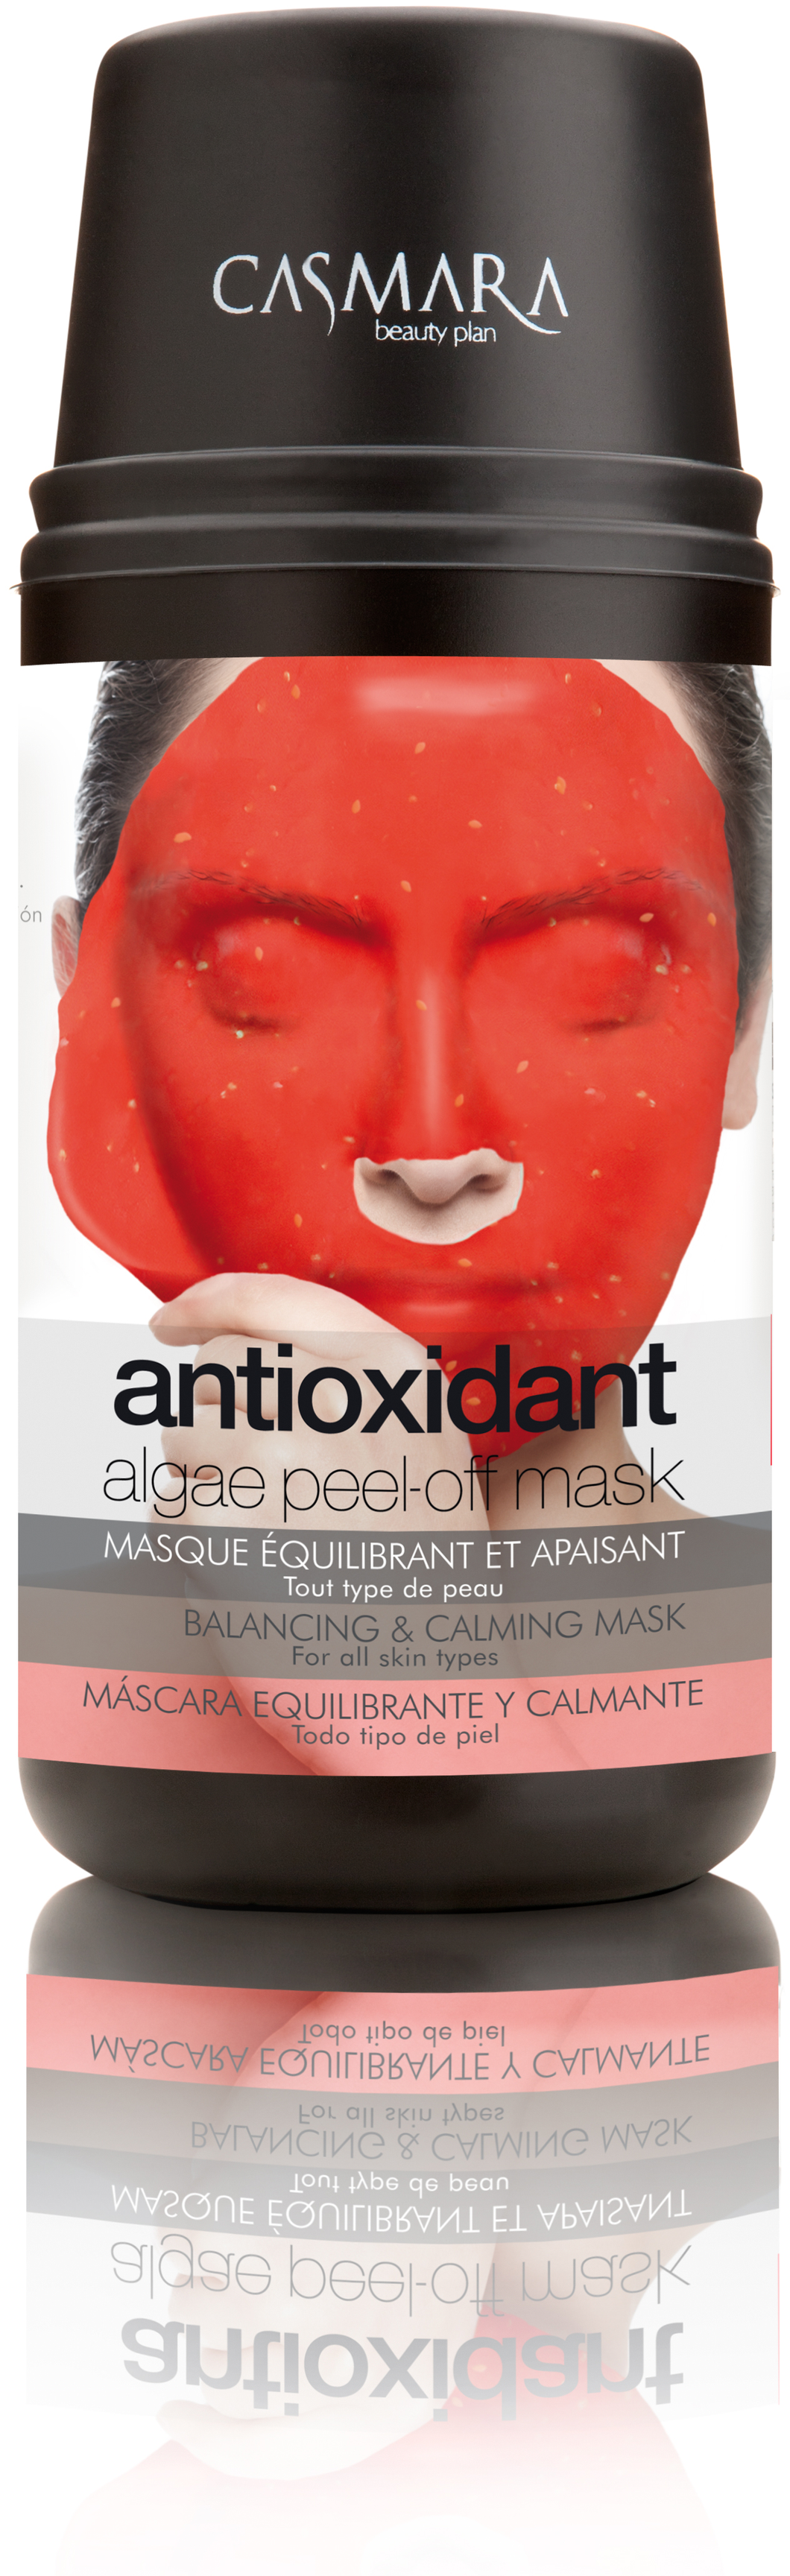 Antioxidant Mask Kit